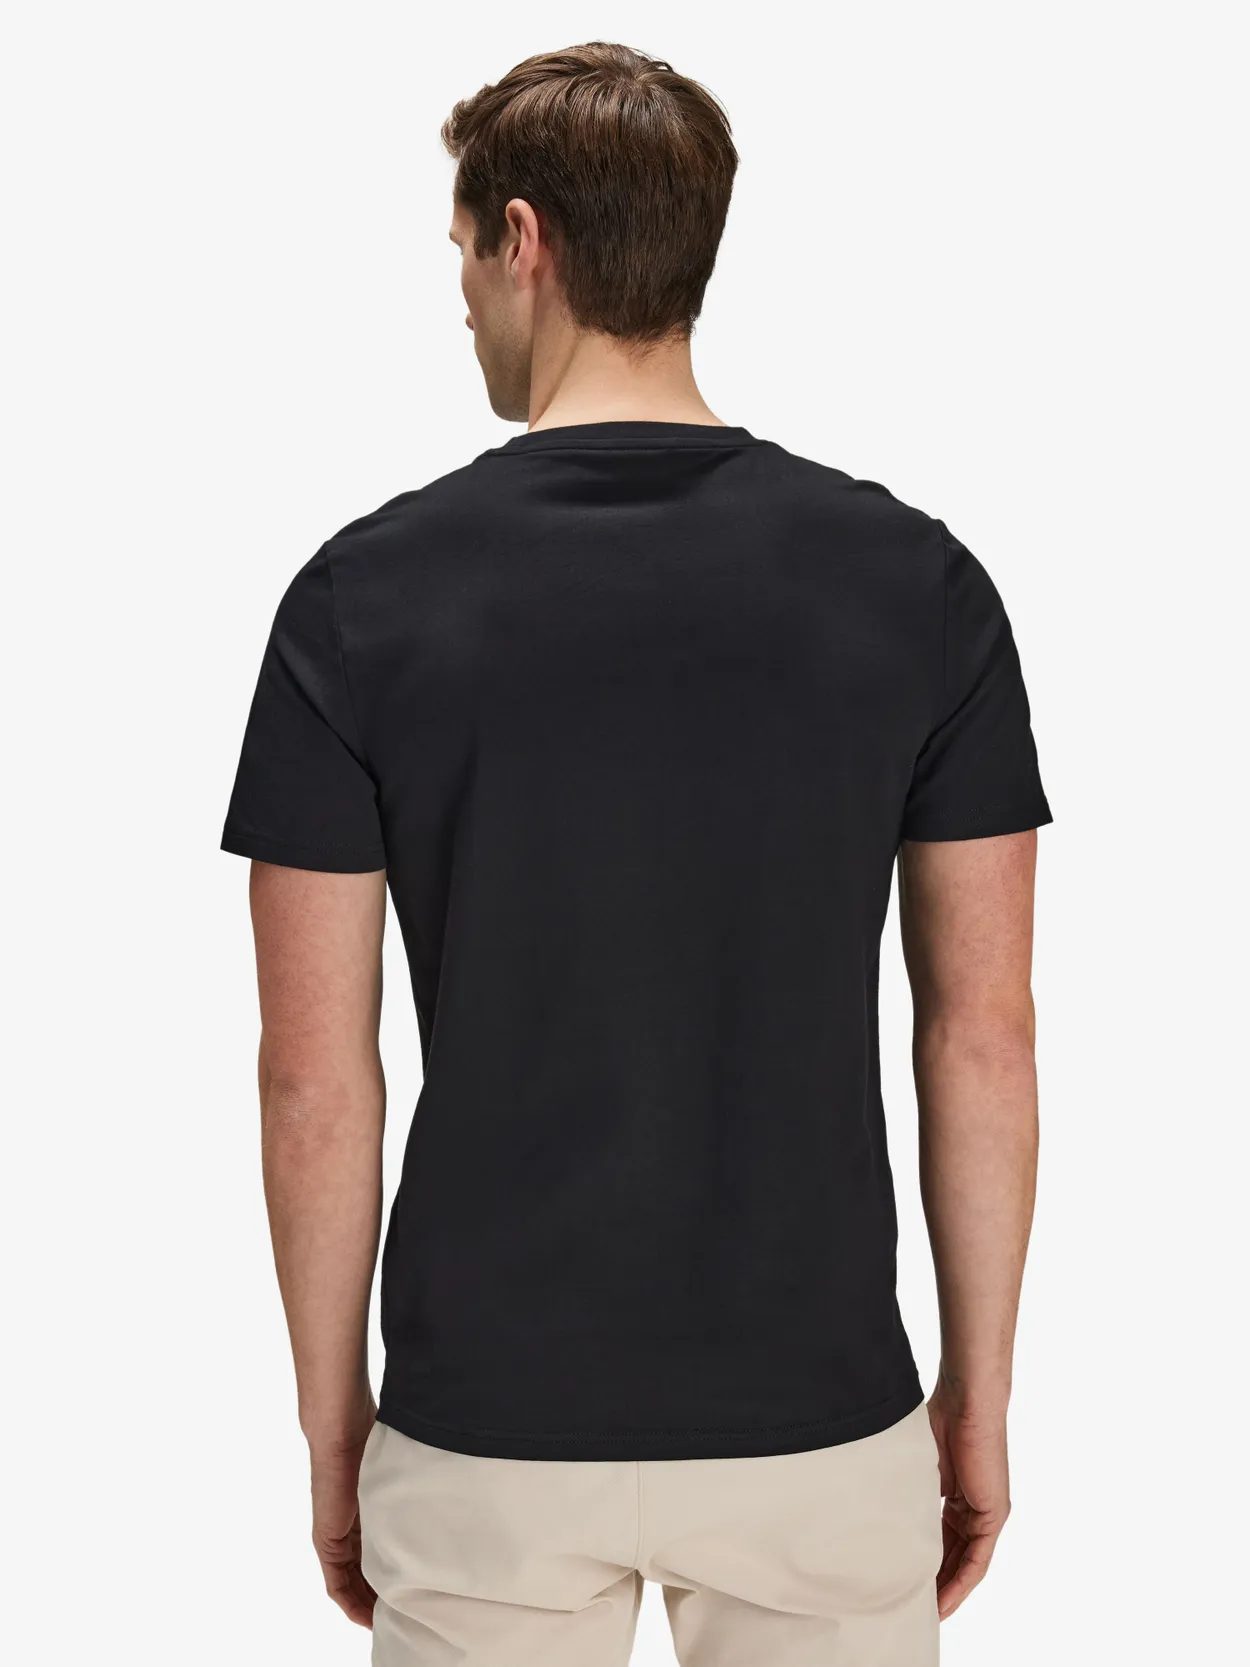 Image number 5 for product 2-Pack Vit & Svart T-Shirts